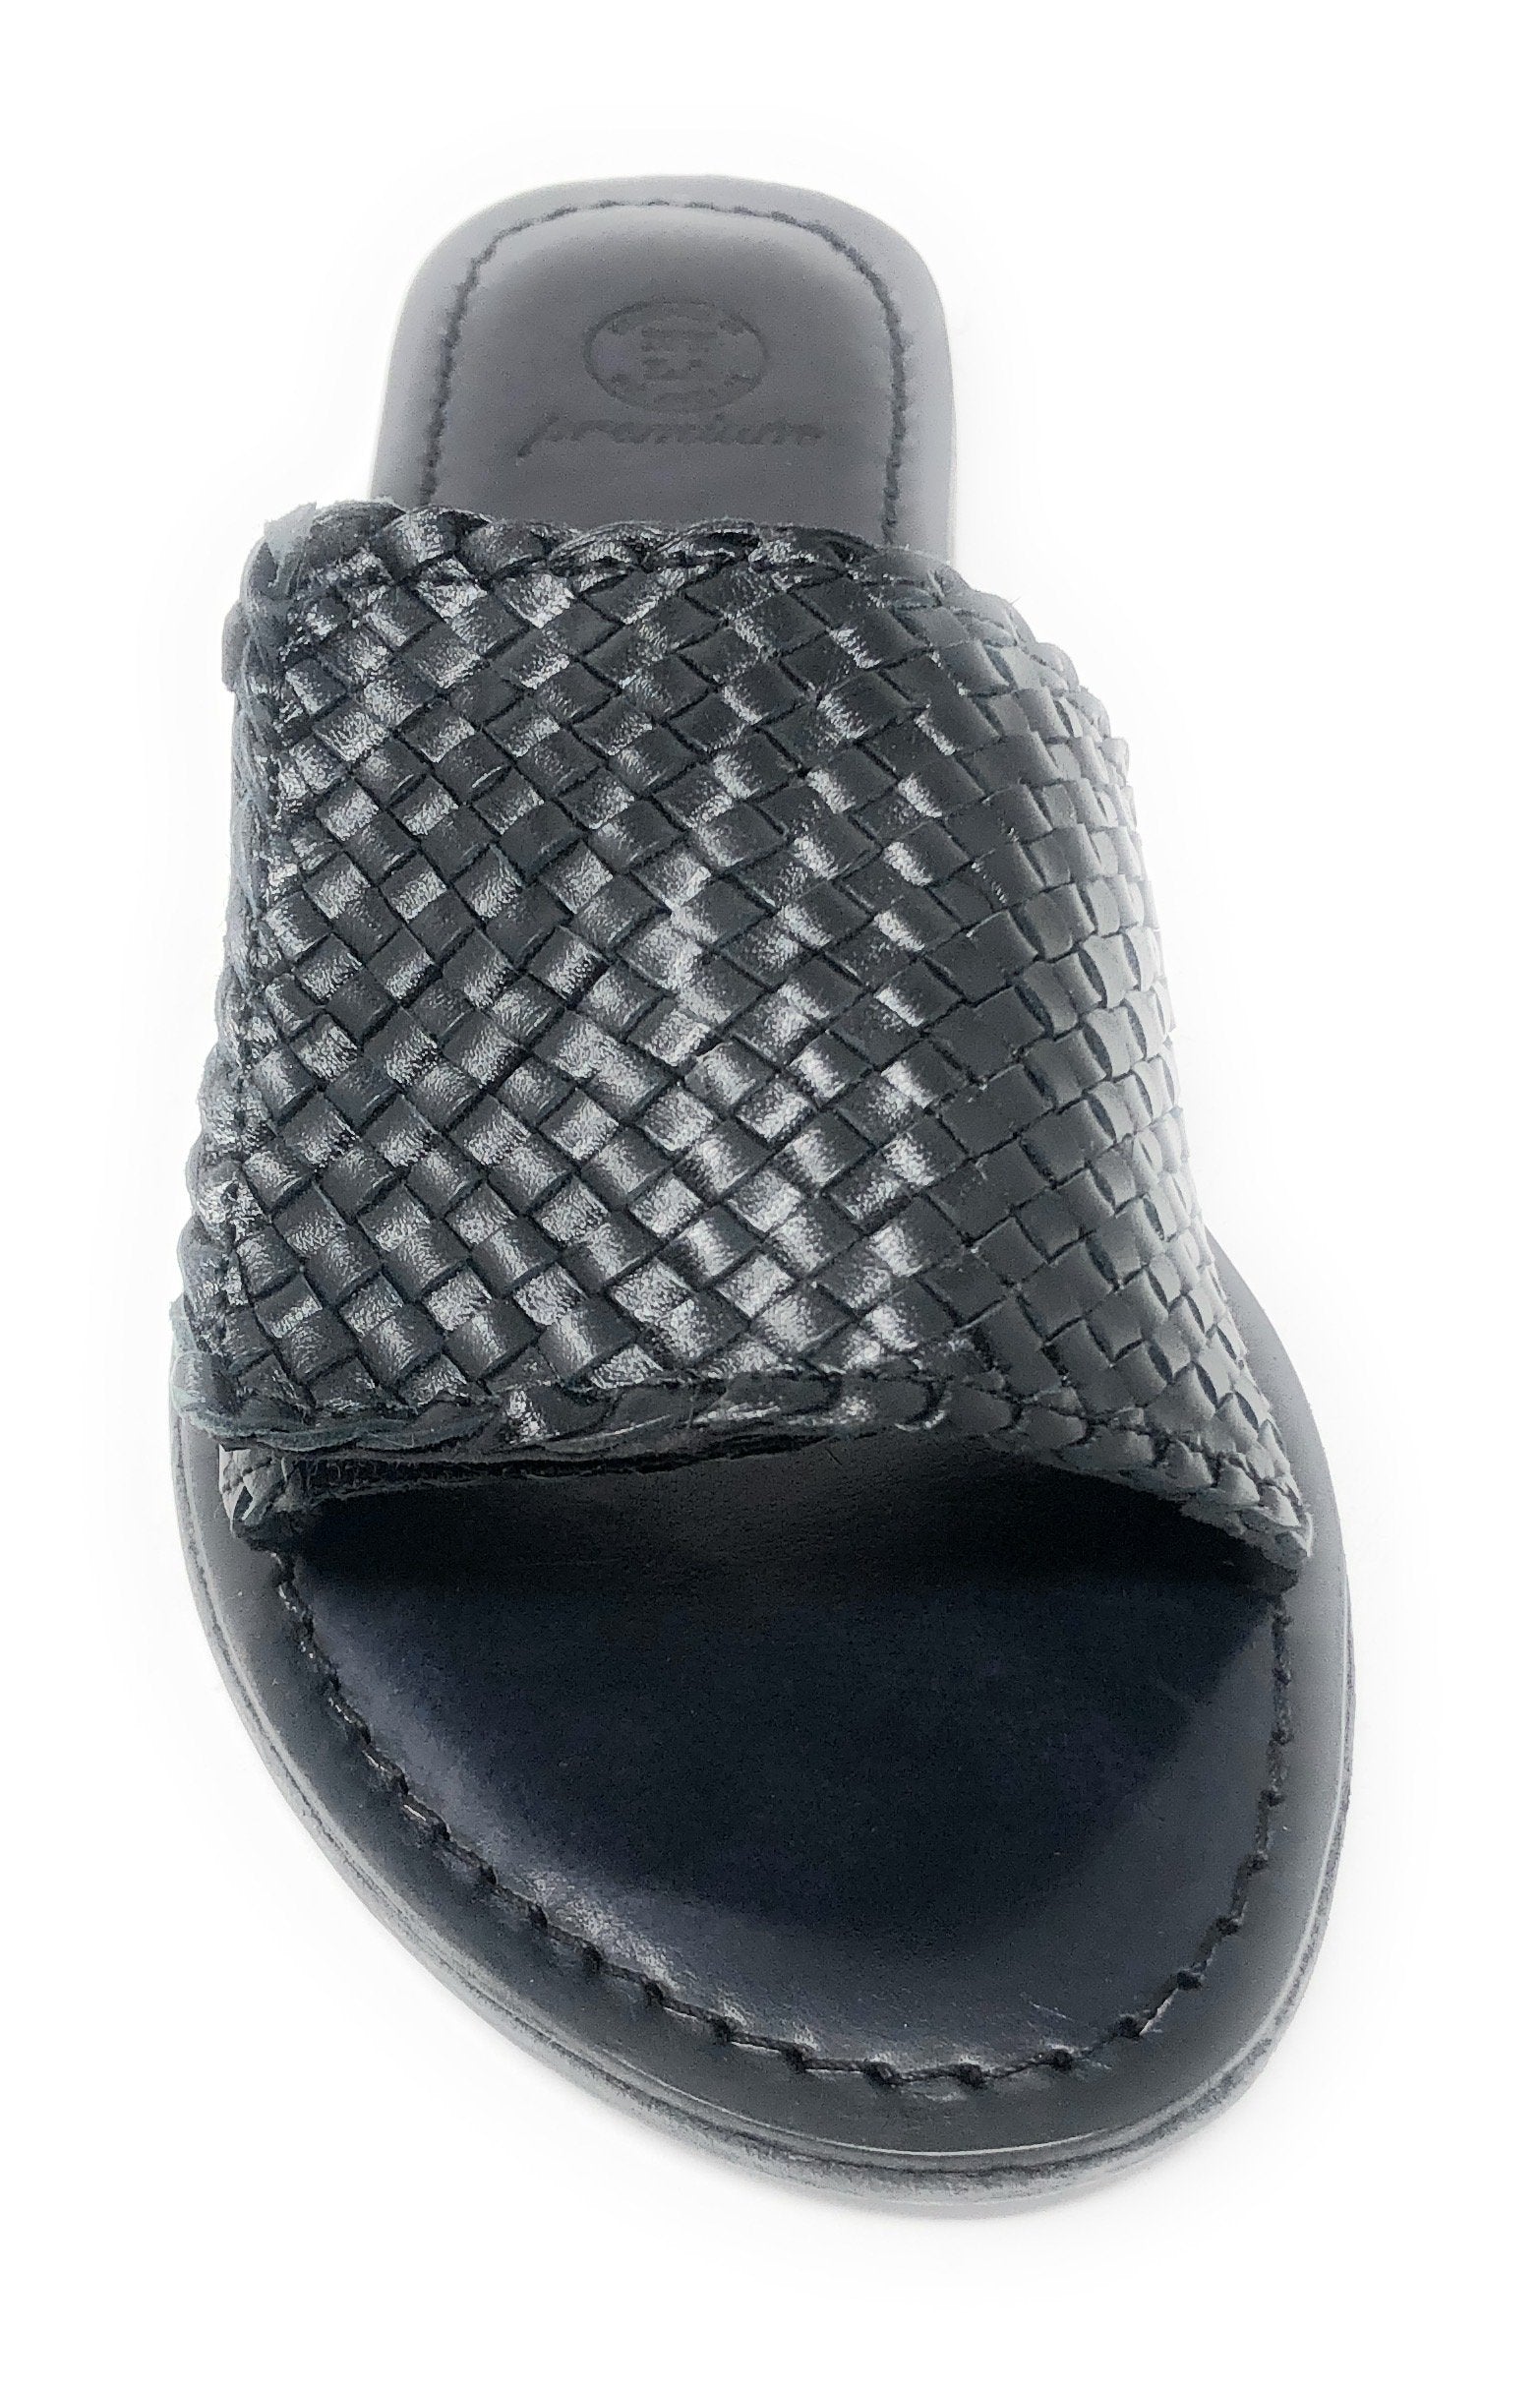 Avalon Leather Slides